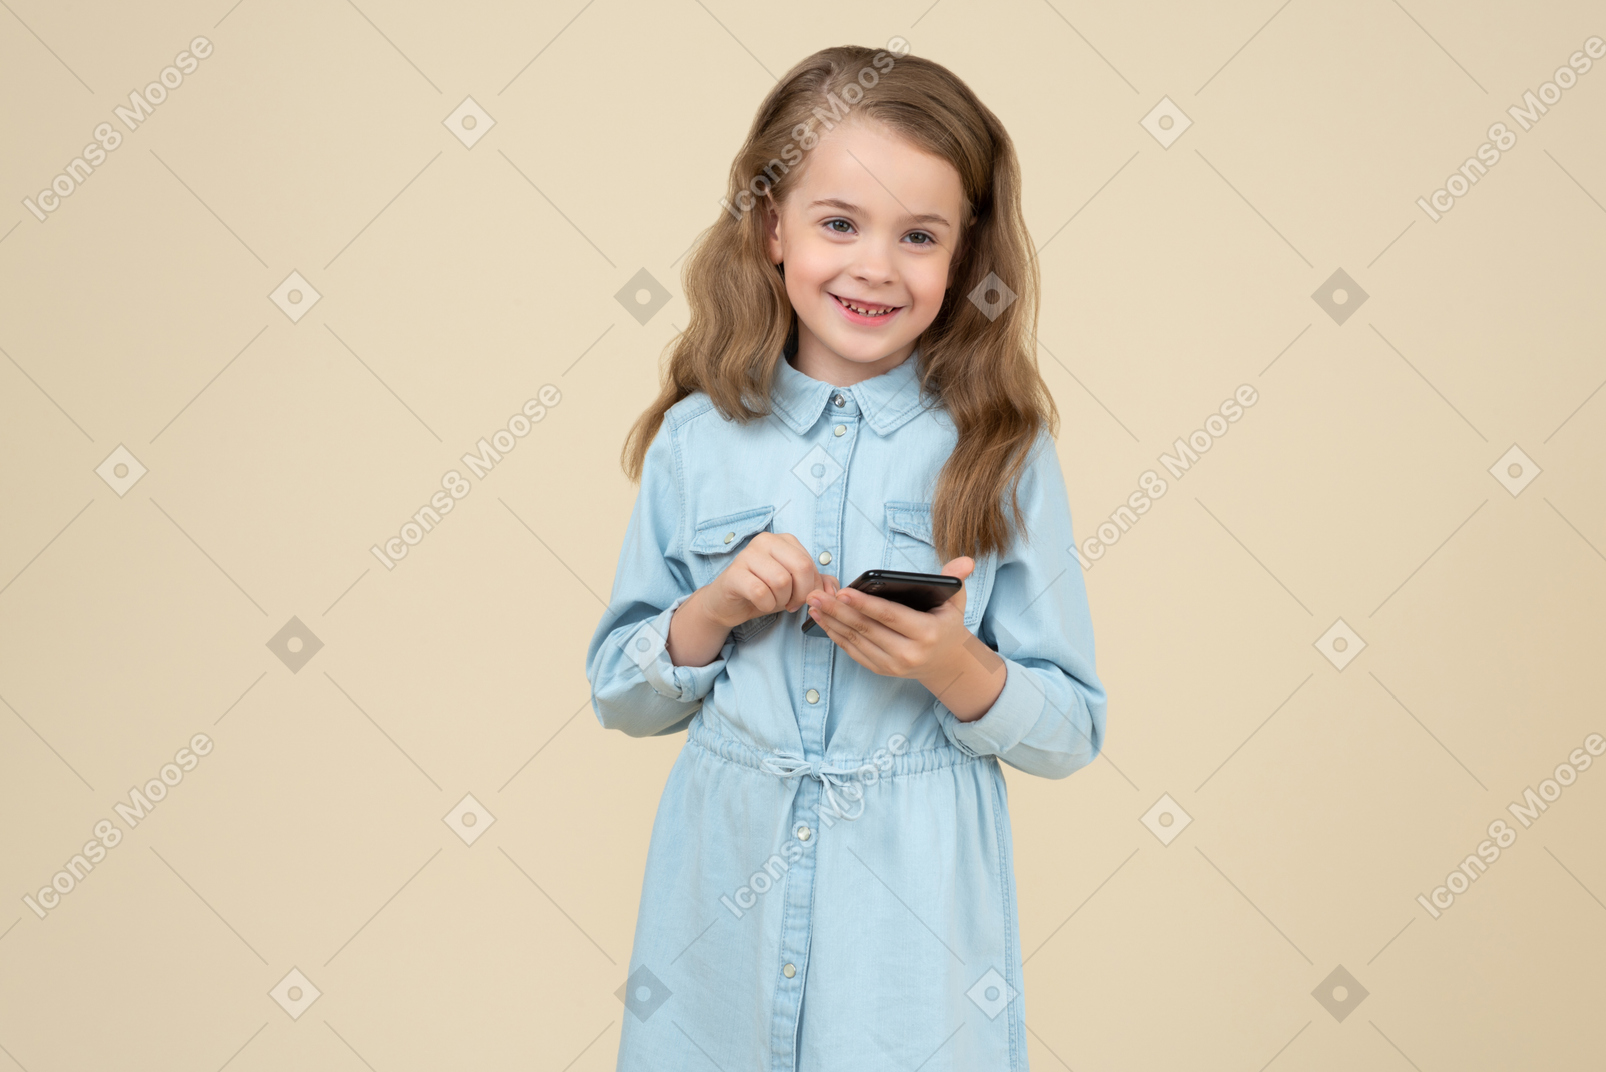 Cute little girl holding a smartphone